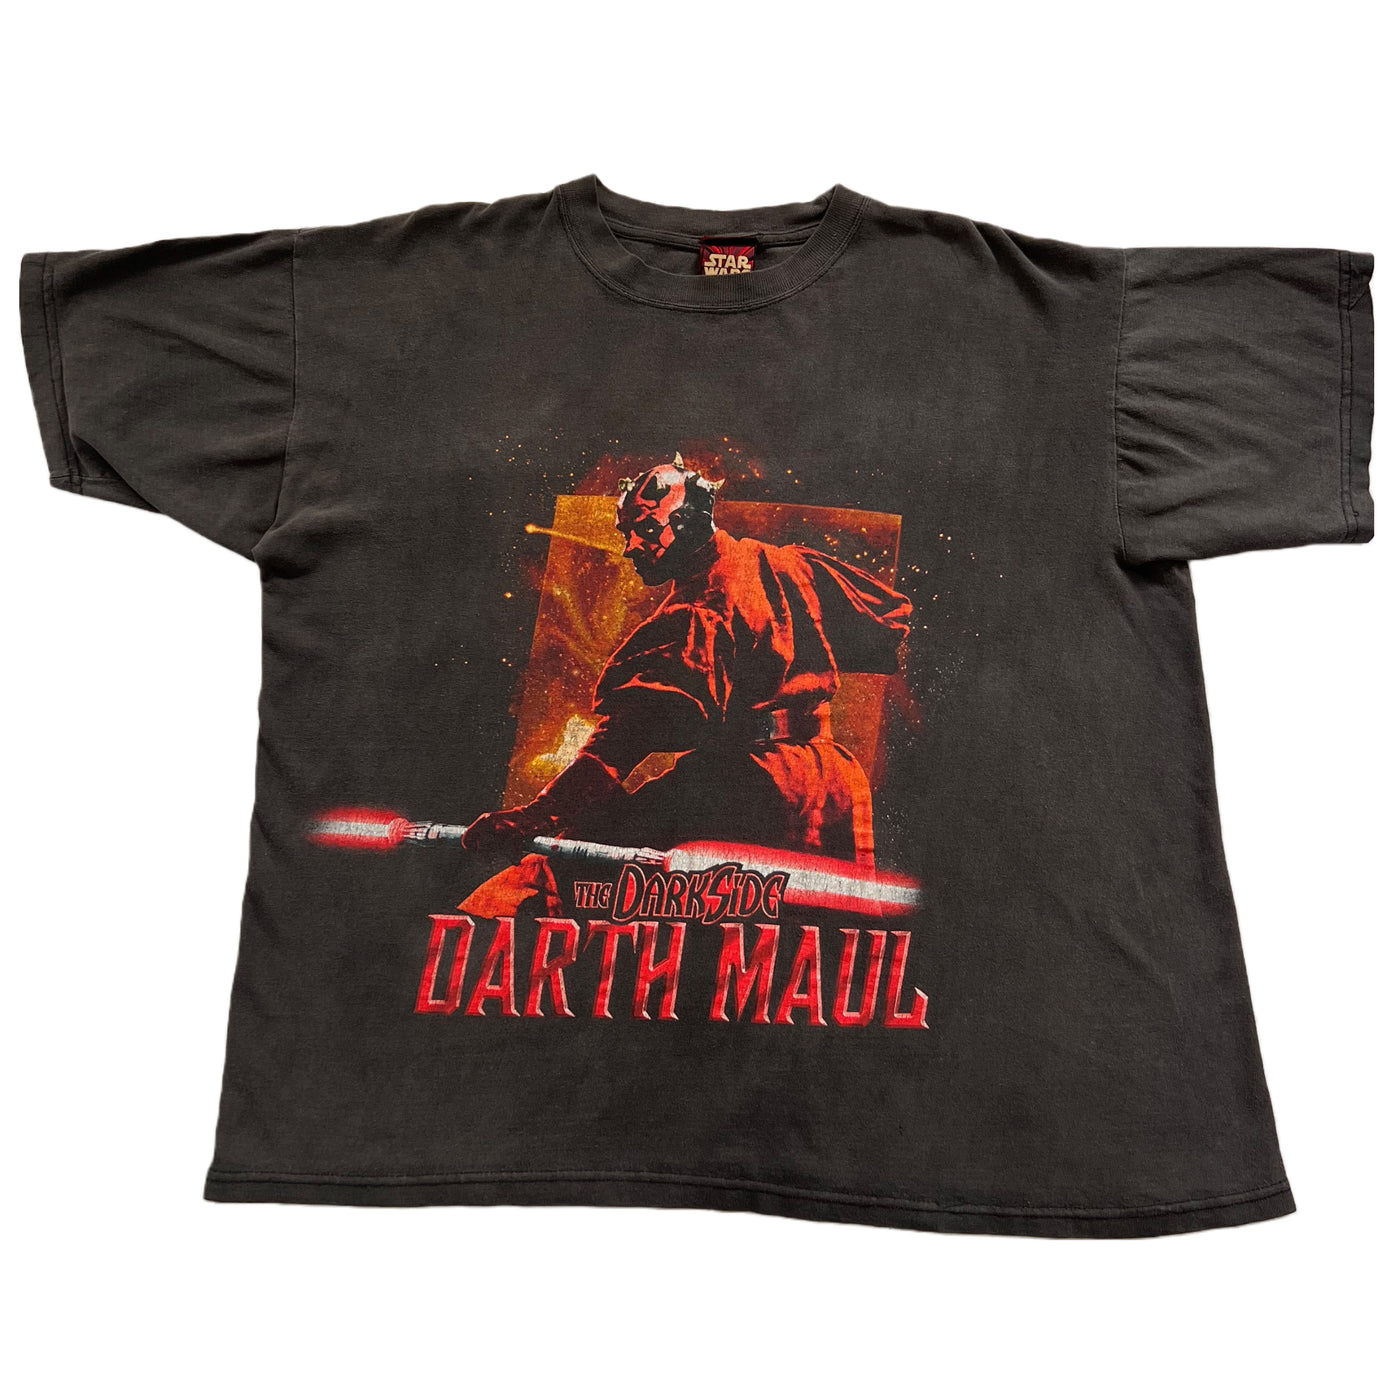 Vintage Star Wars Darth Maul T-shirt. XL